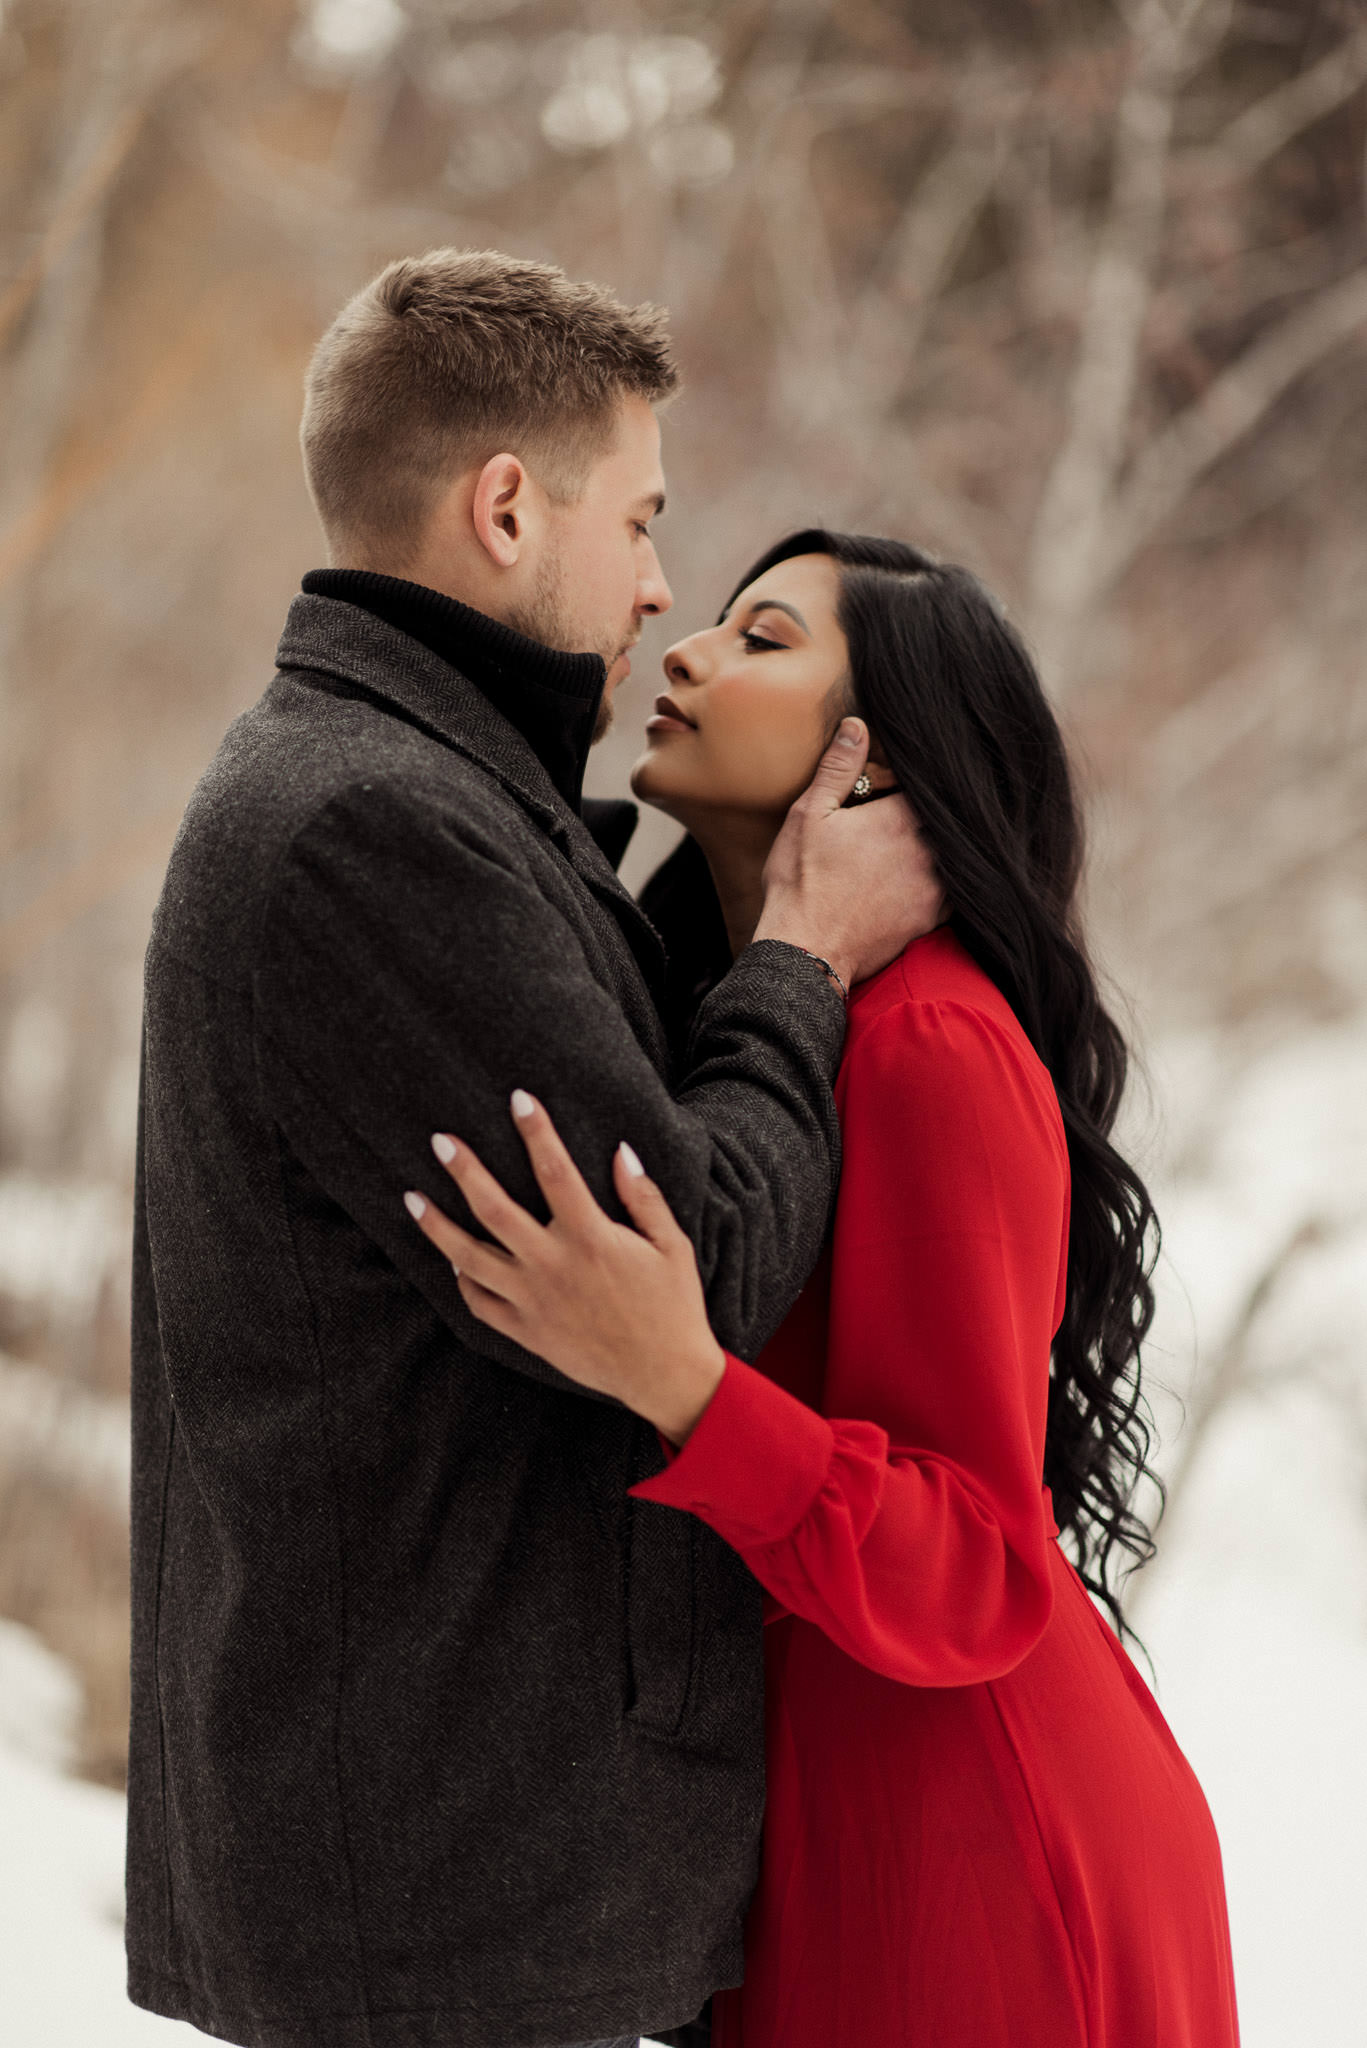 sandra-ryan-colorado-winter-snow-engagement-couples-valentines-red-houston-photographer-sm-3.jpg